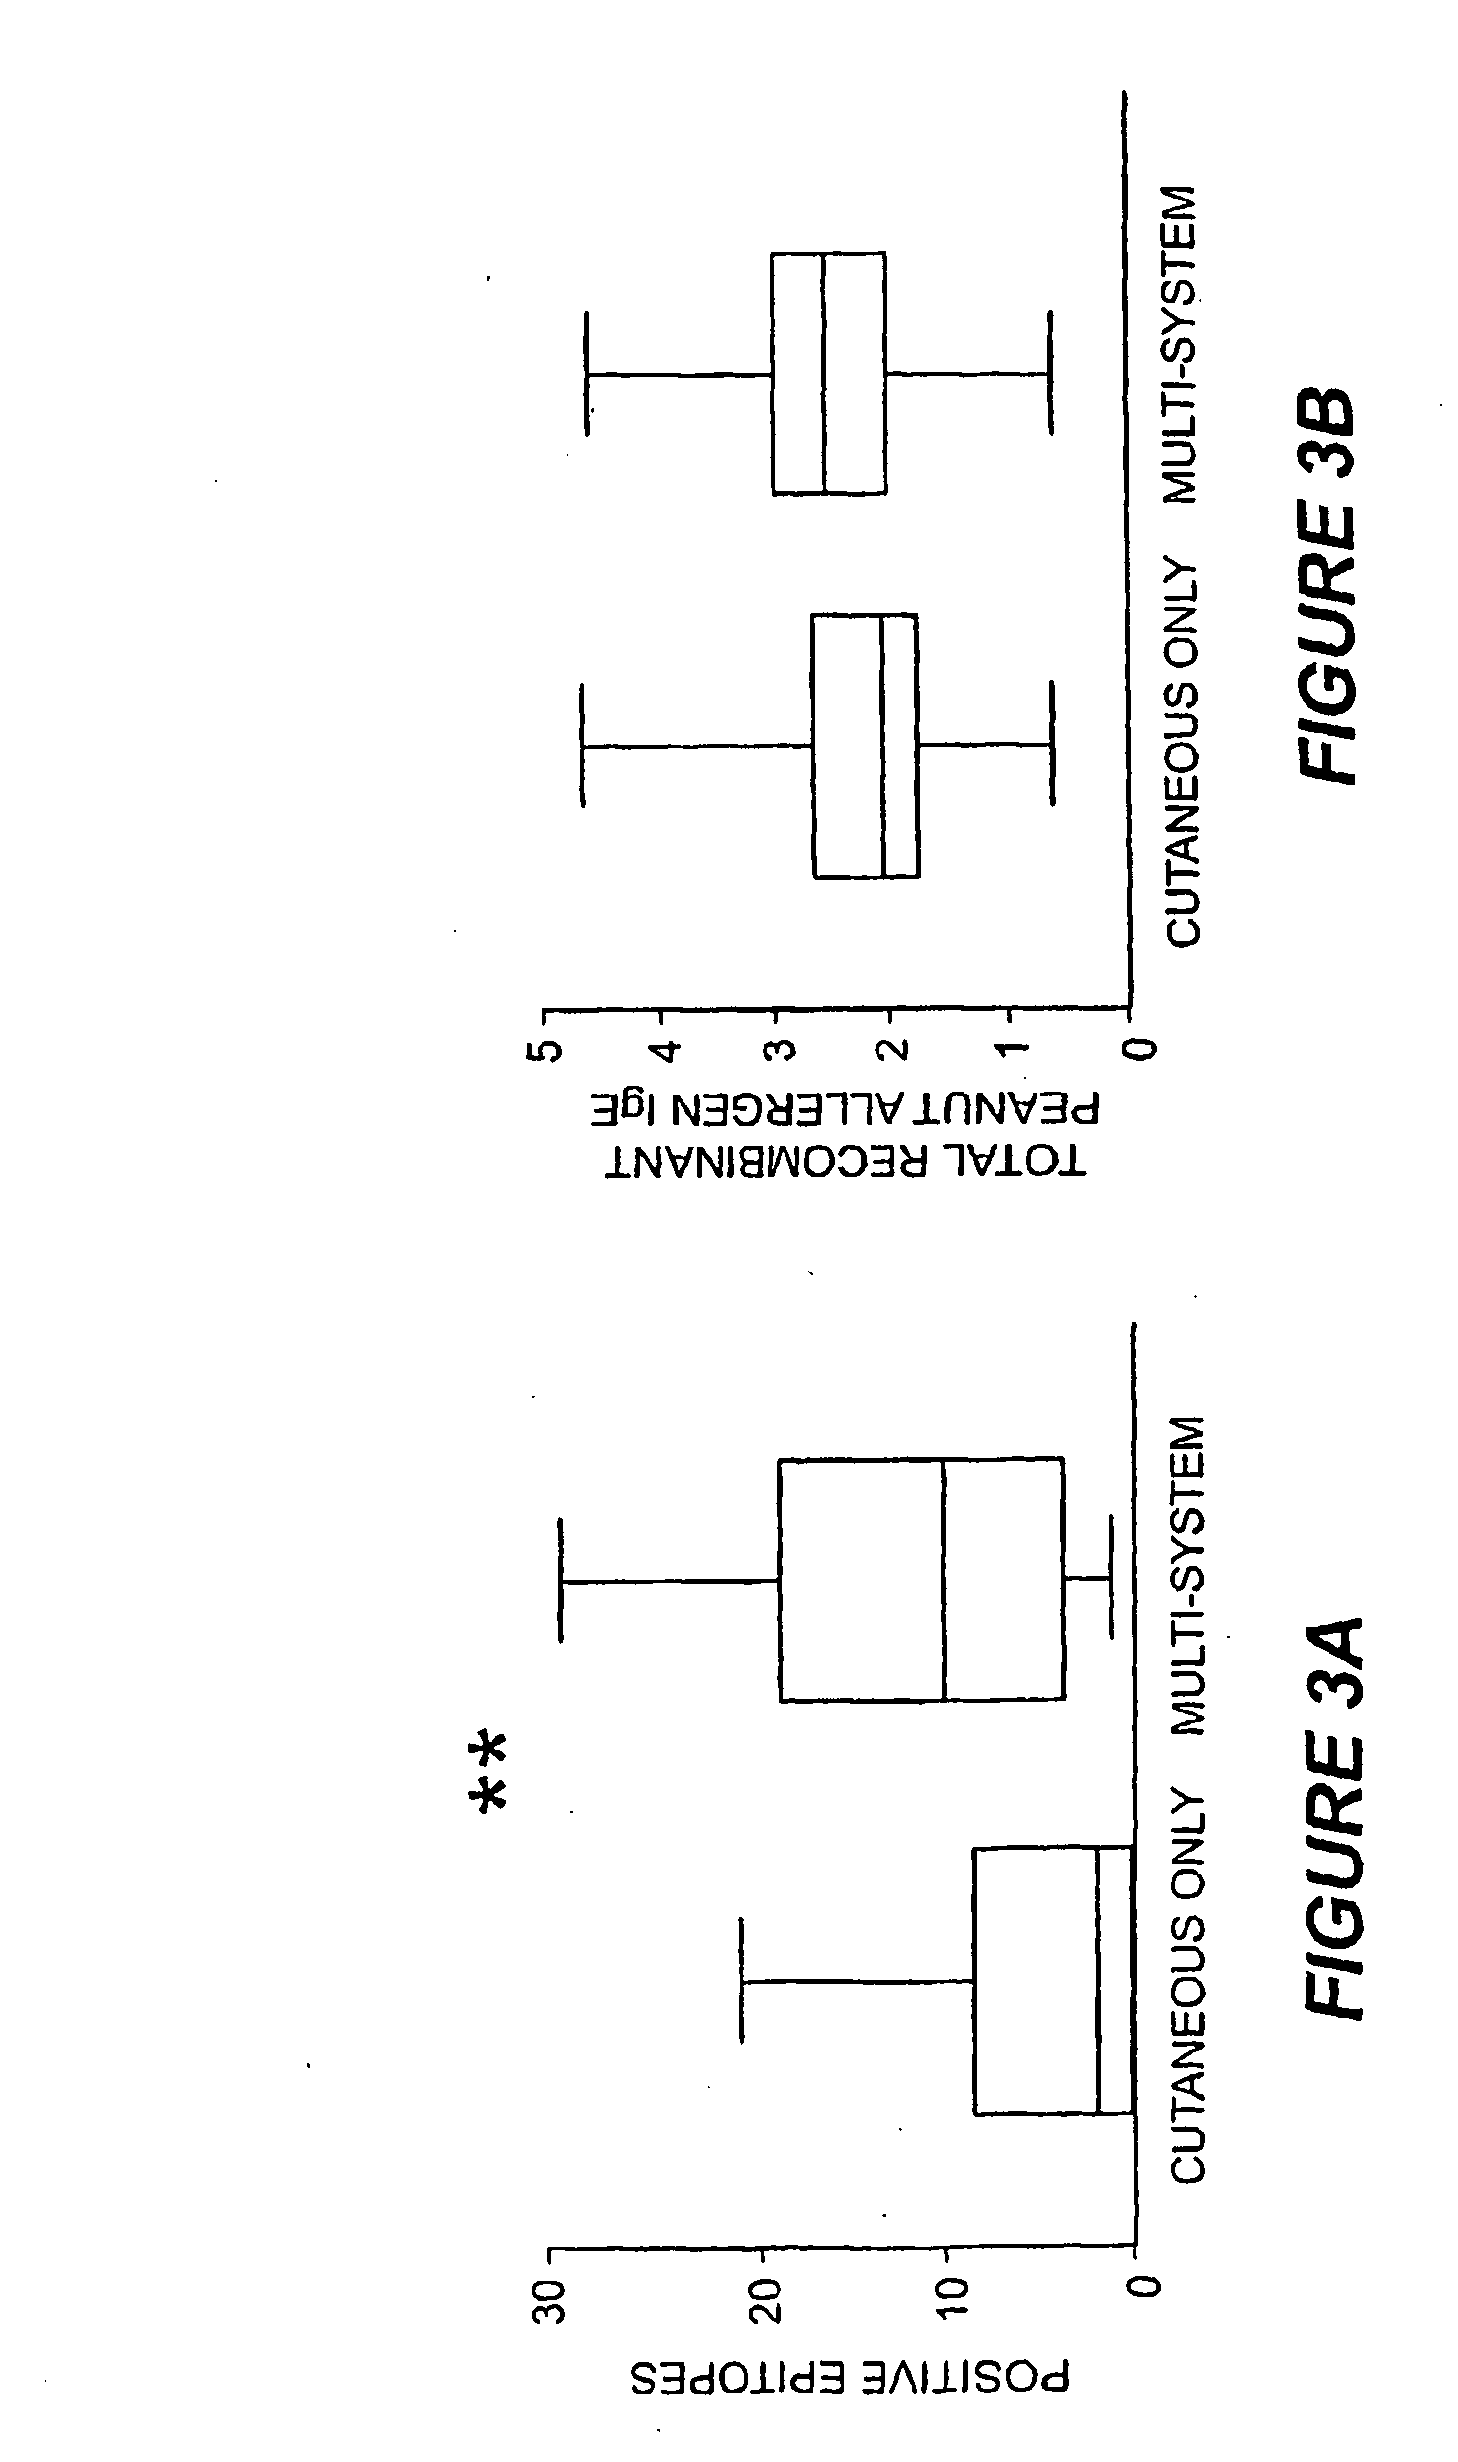 Methods of determining allergen response using microarray immunoassay techniques